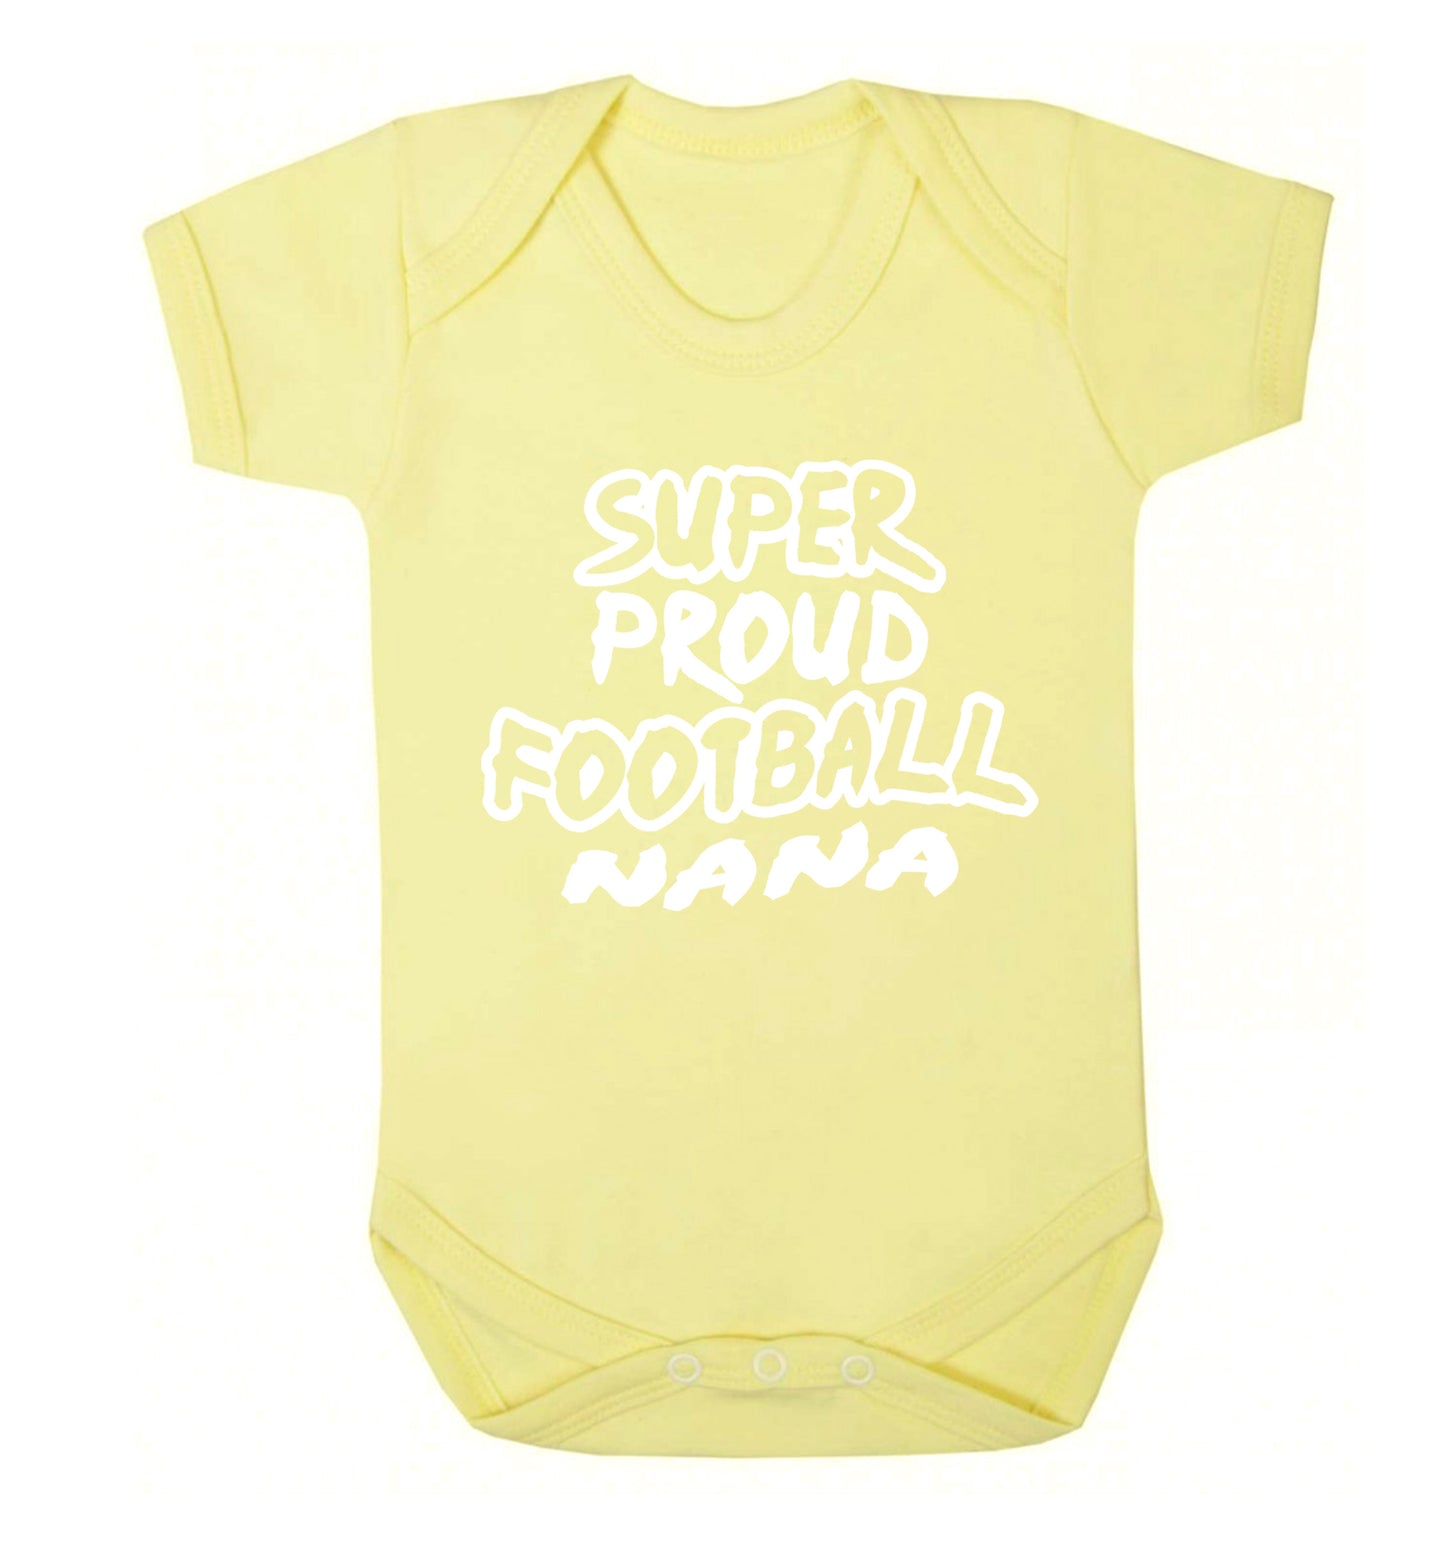 Super proud football nana Baby Vest pale yellow 18-24 months